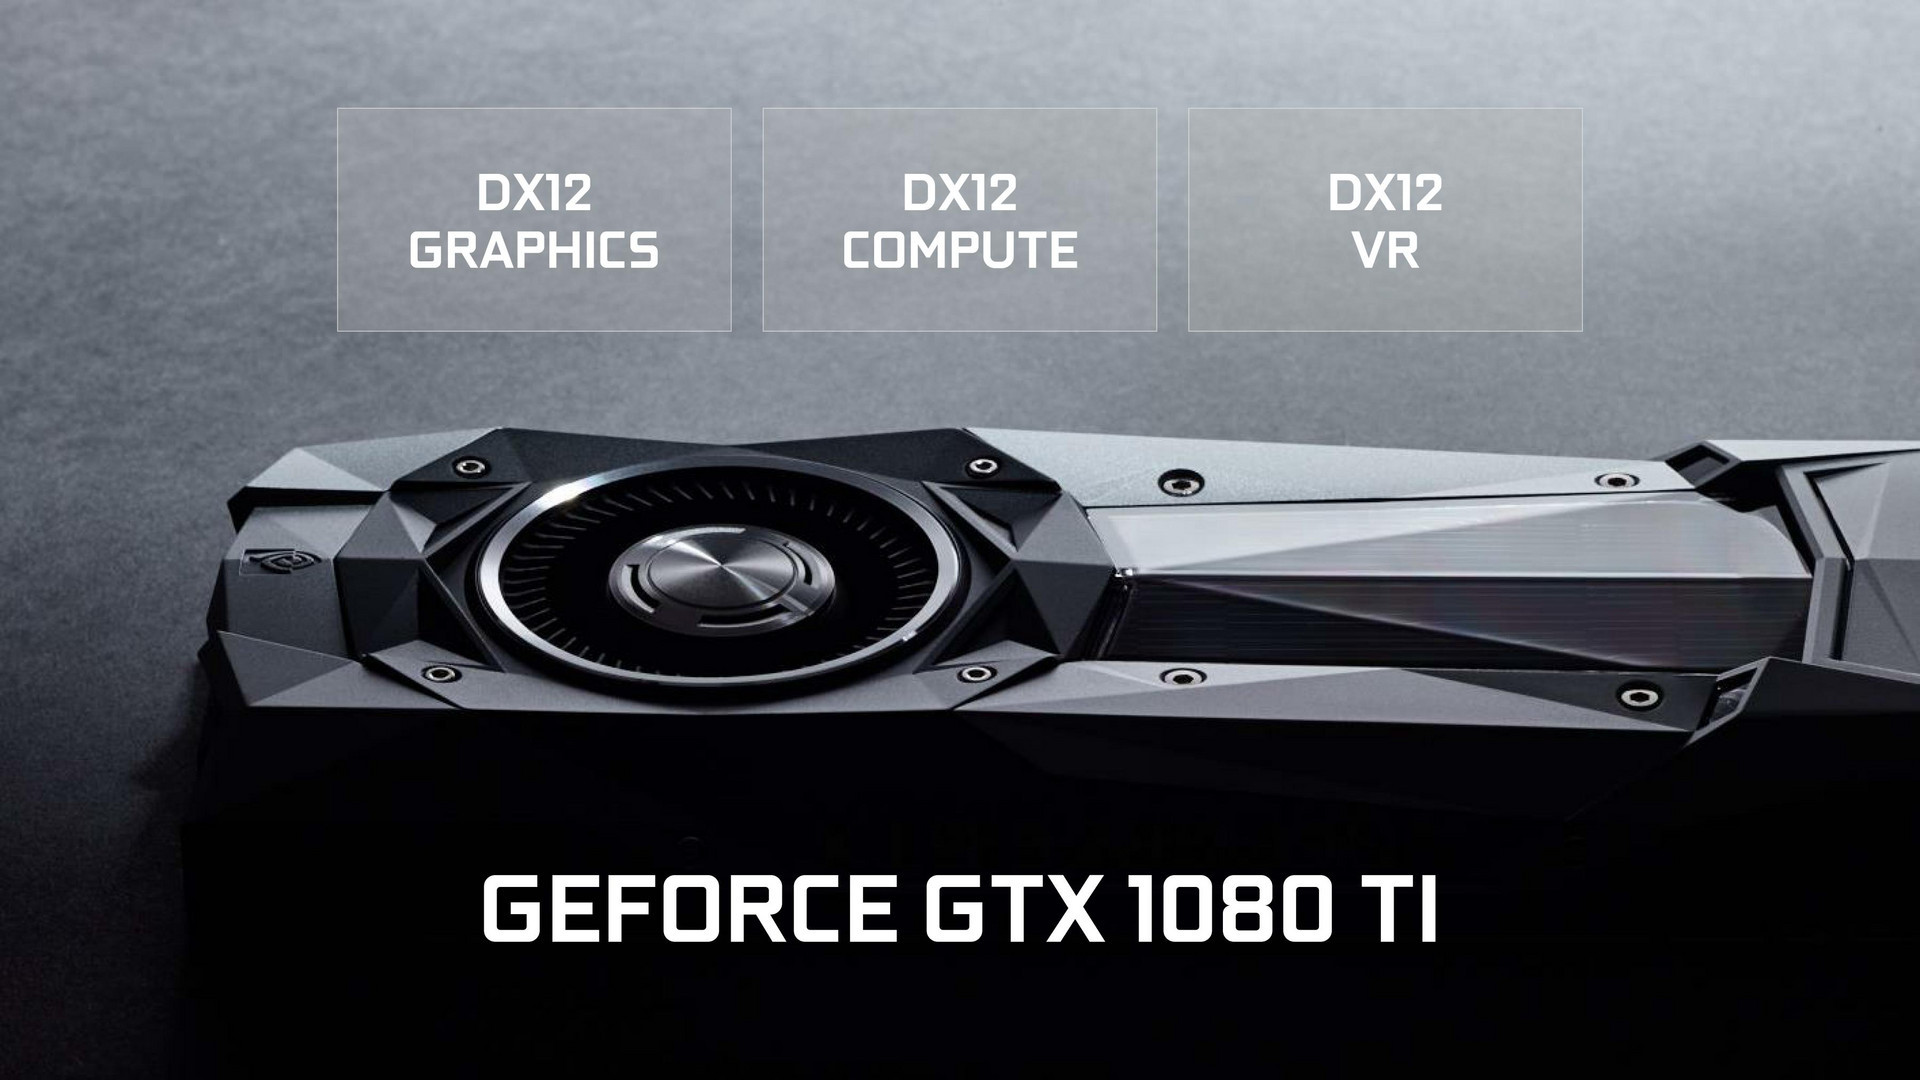 1920x1080 Nvidia GTX 1080 Ti promises 35 percent performance boost over GTX 1080